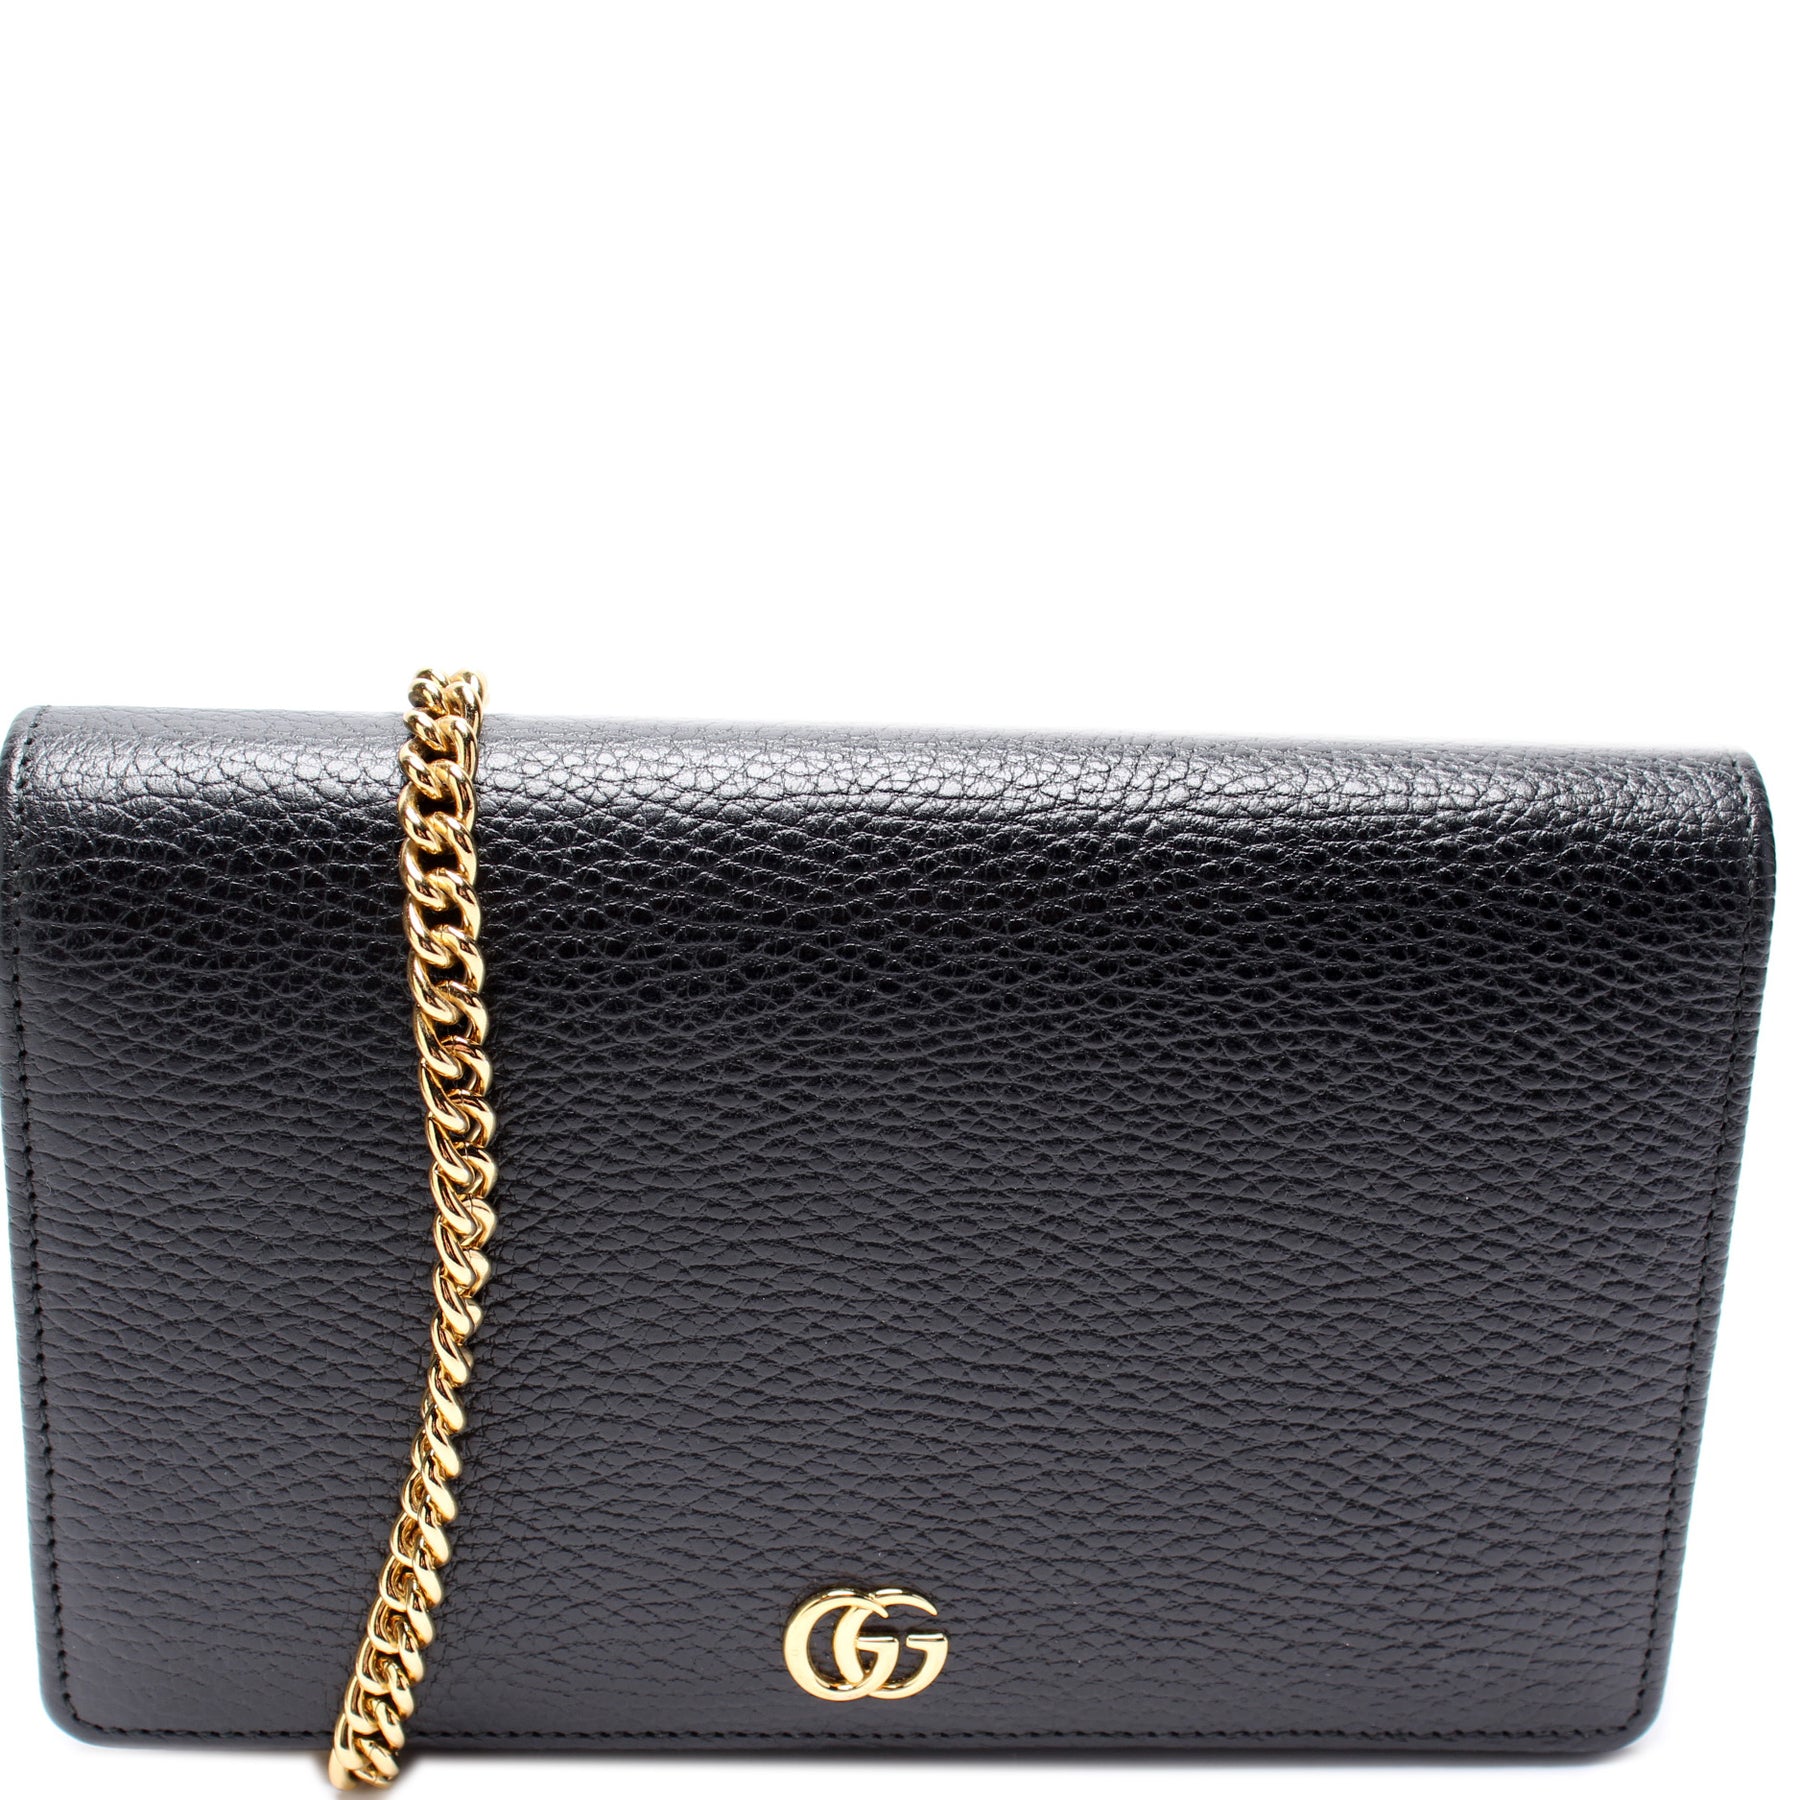 Gucci Gg Marmont Leather Mini Chain Bag in Gray